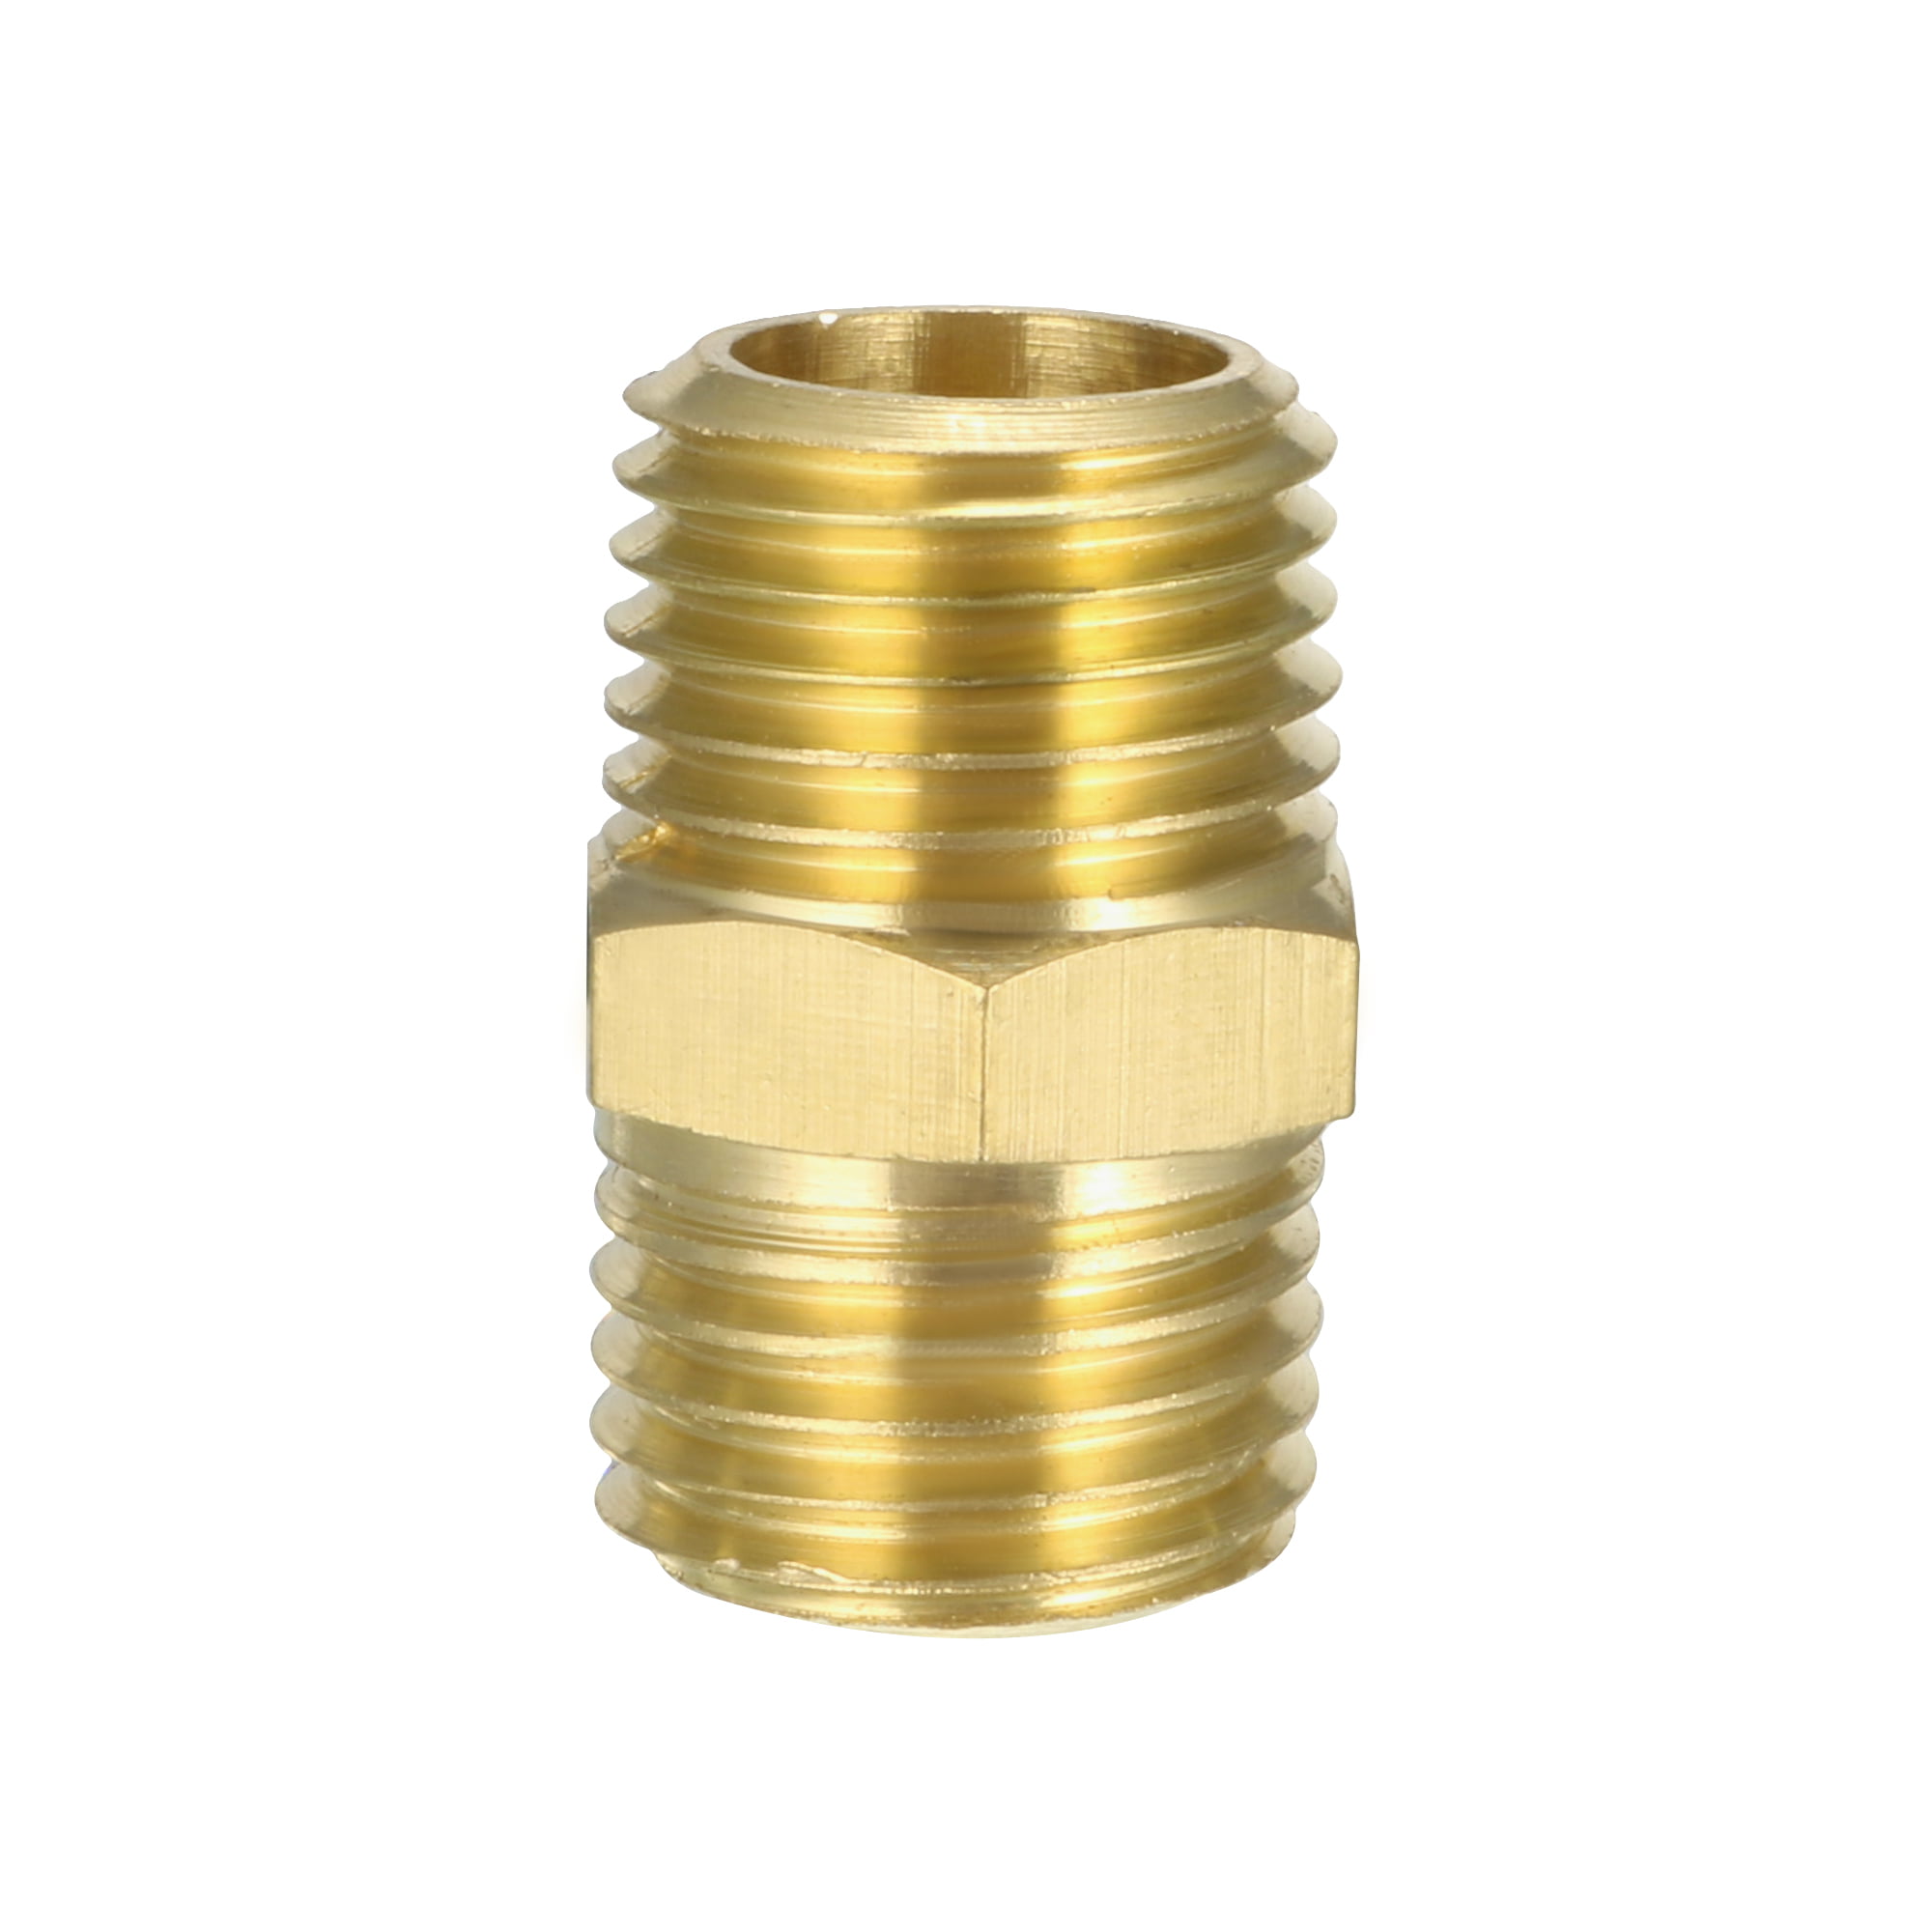 Brass Pipe Fitting Hex Nipple 1 4 Npt X 1 4 Npt Male Pipe